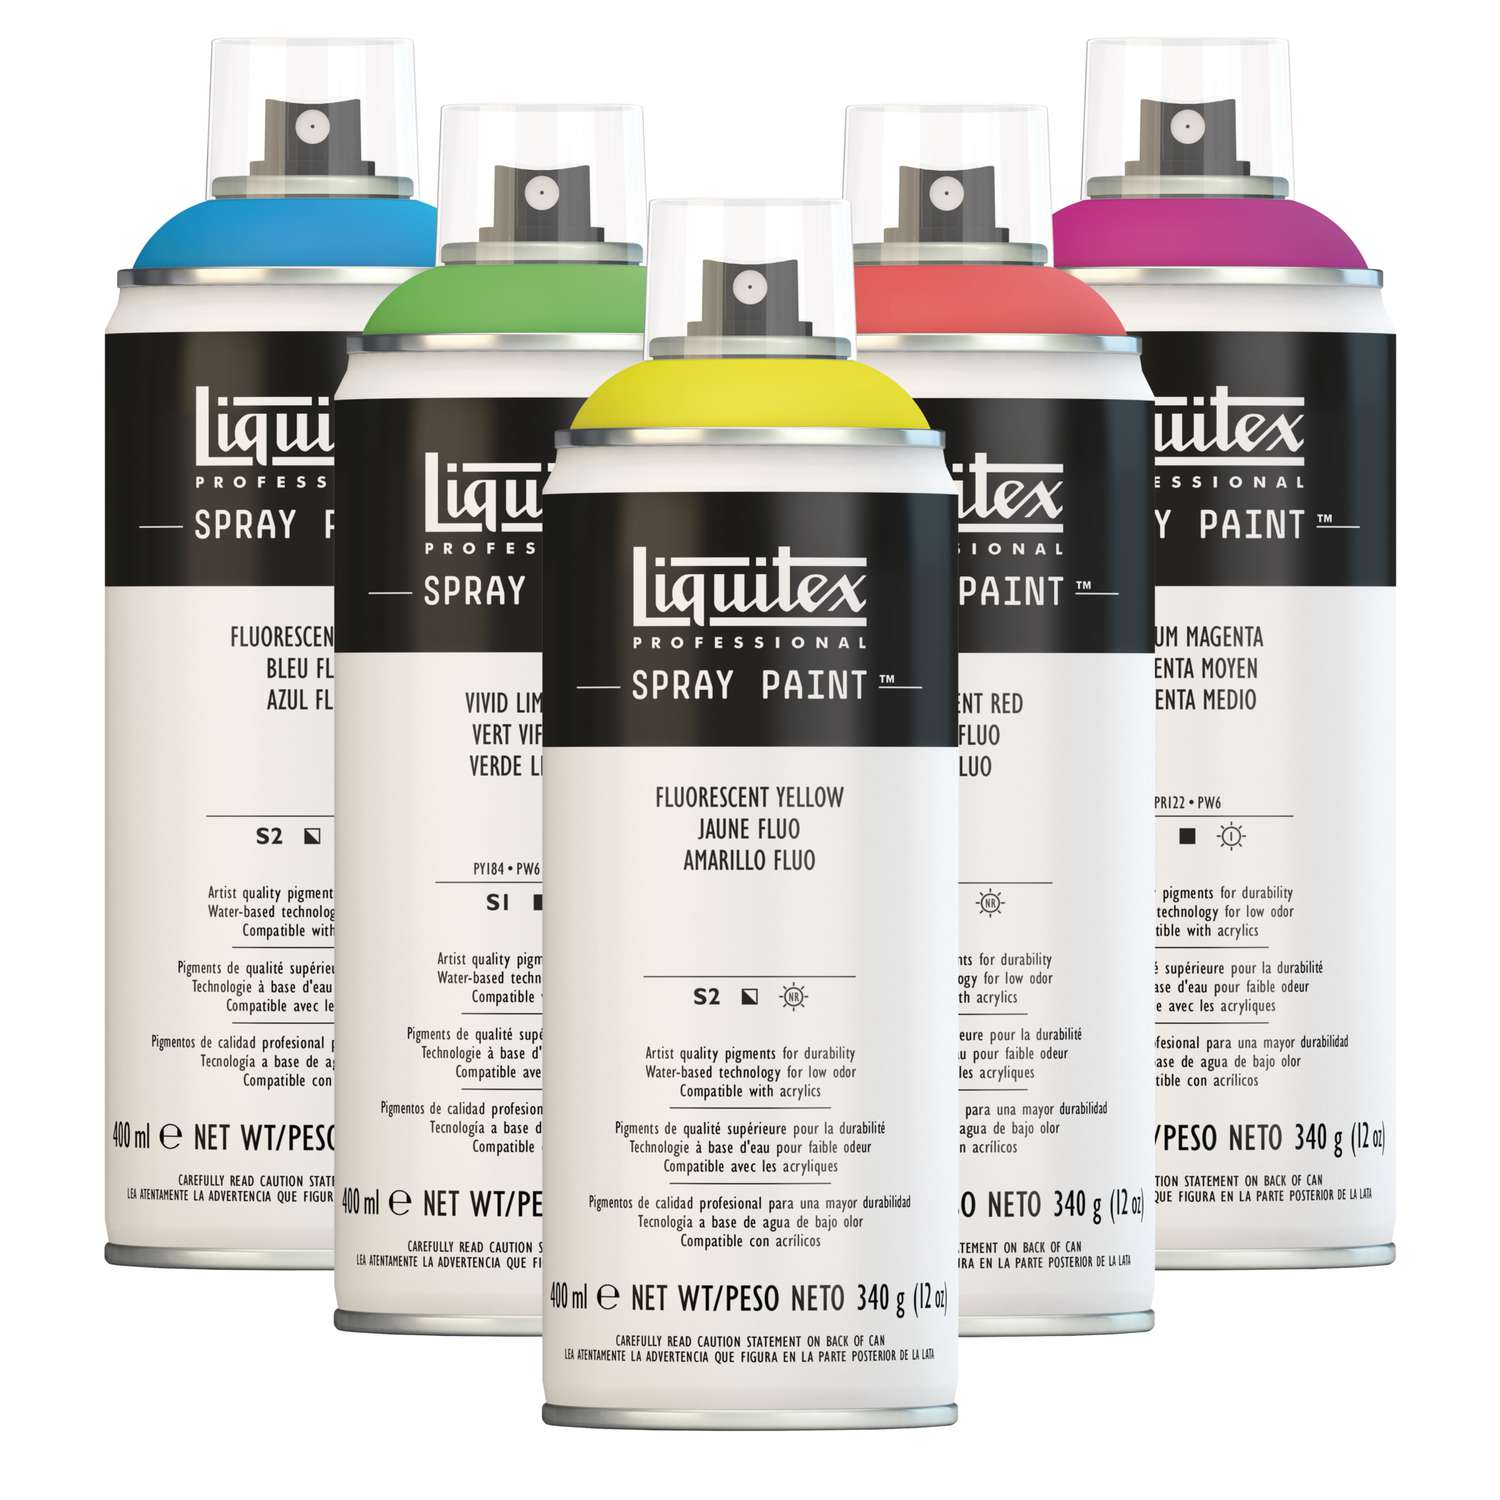 Liquitex 400ml Professional Acrylic Spray Paint - Iridescent